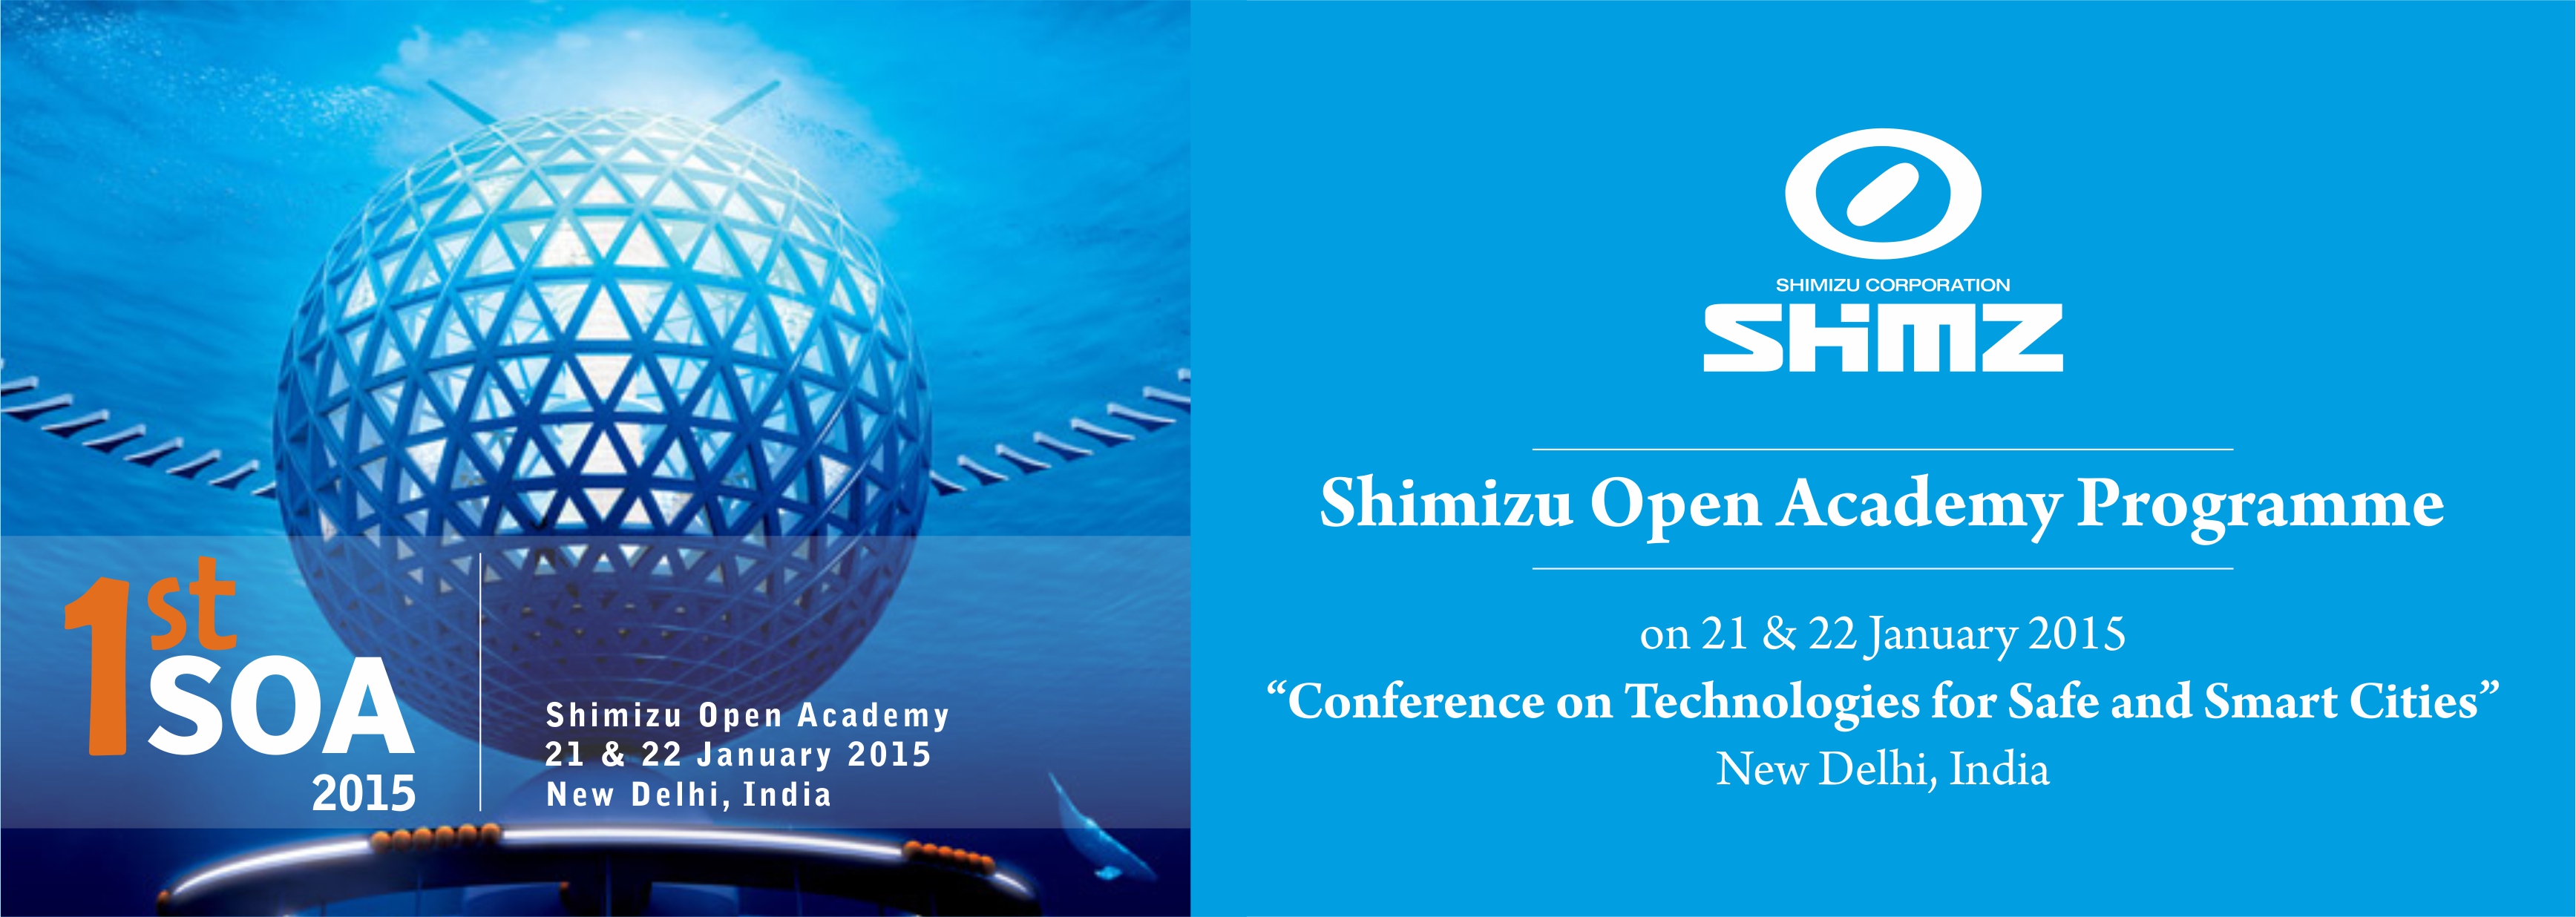 Shimizu Open Academy (SOA) 2015